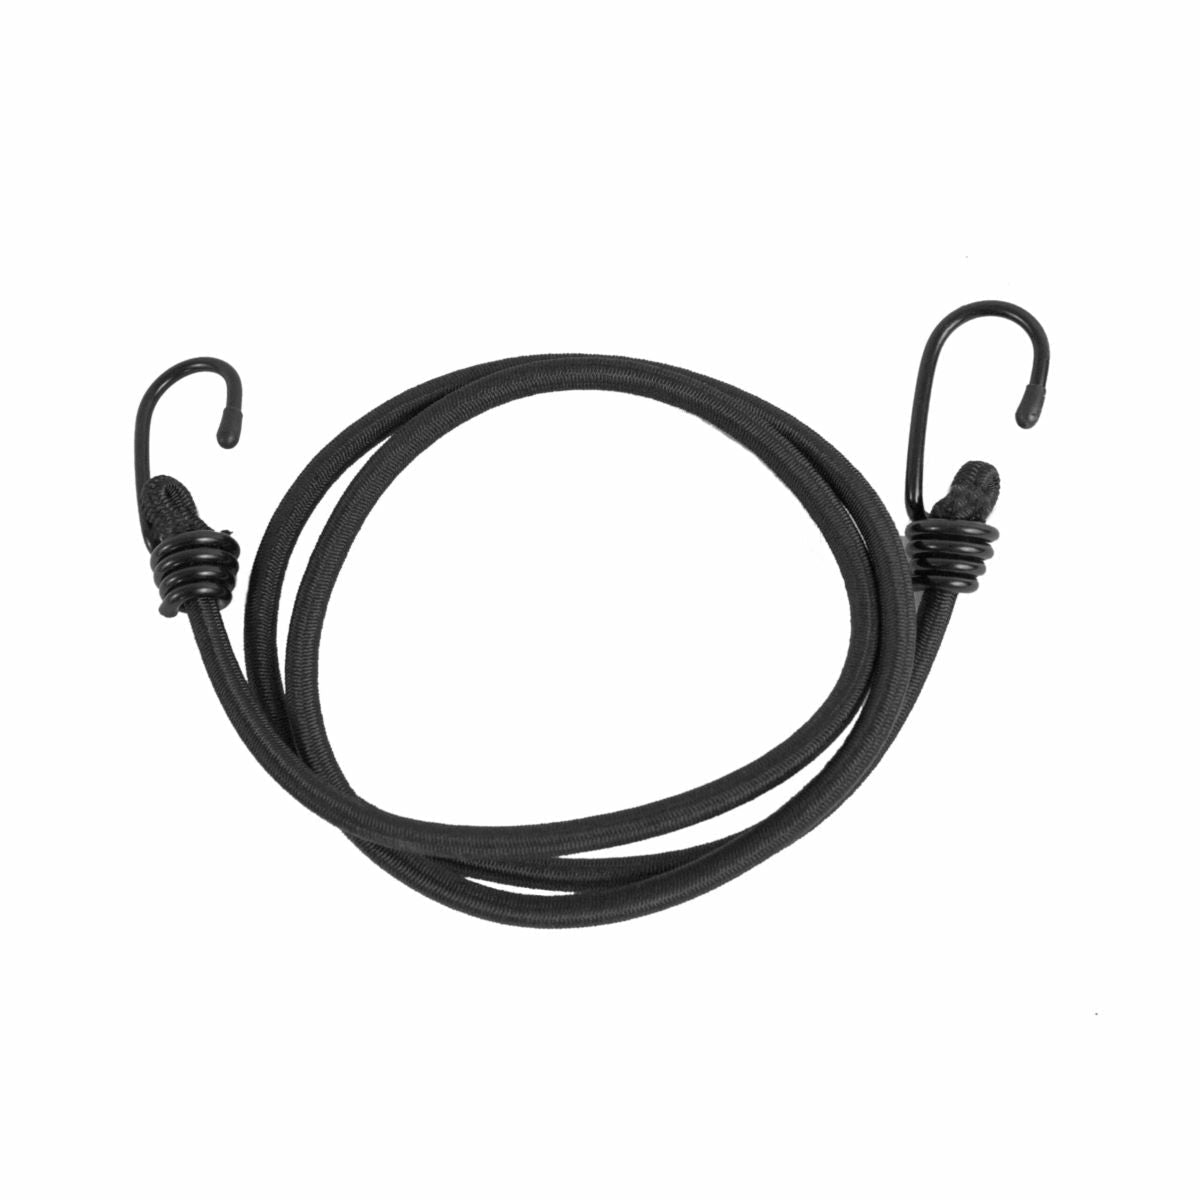 MotoTech Root Bungee Cord Tie-down | OutdoorTravelGear.com - 1